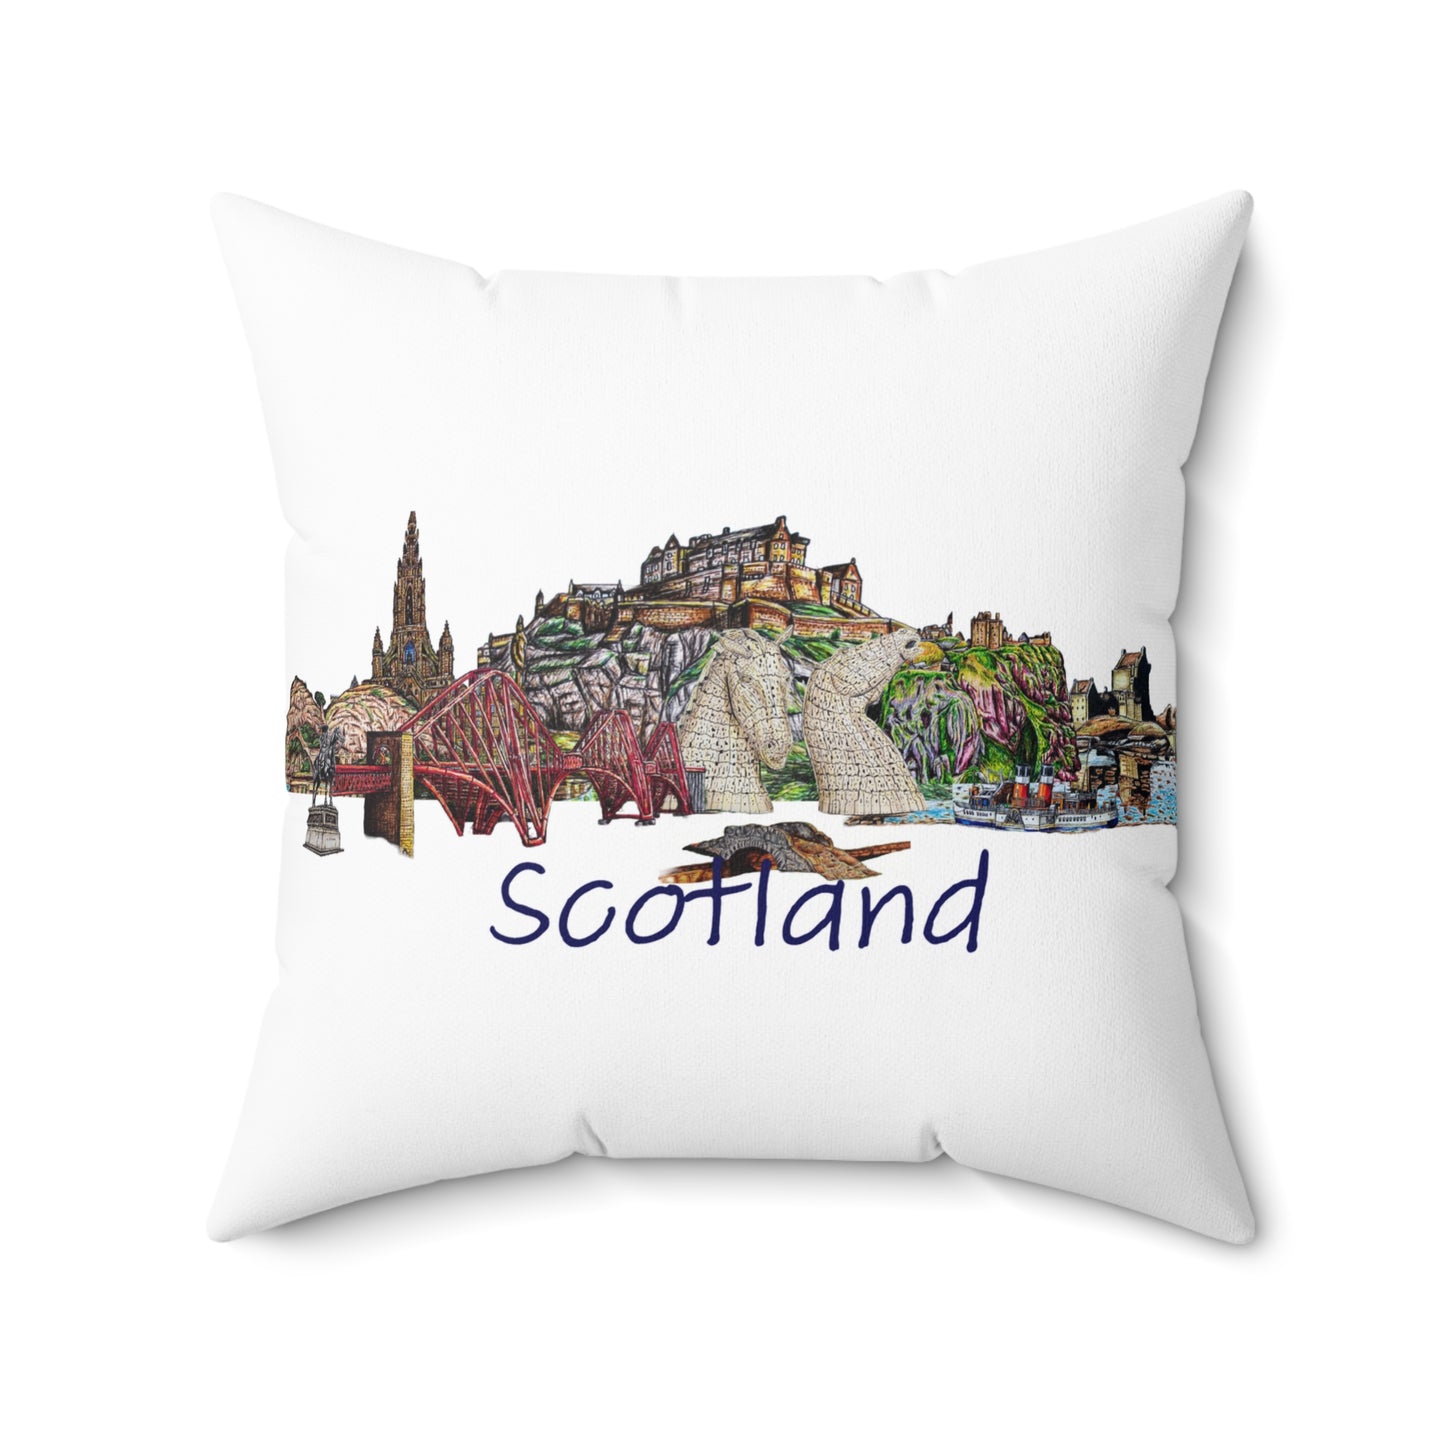 Polyester Square Pillow- The Scotland Landmark Design